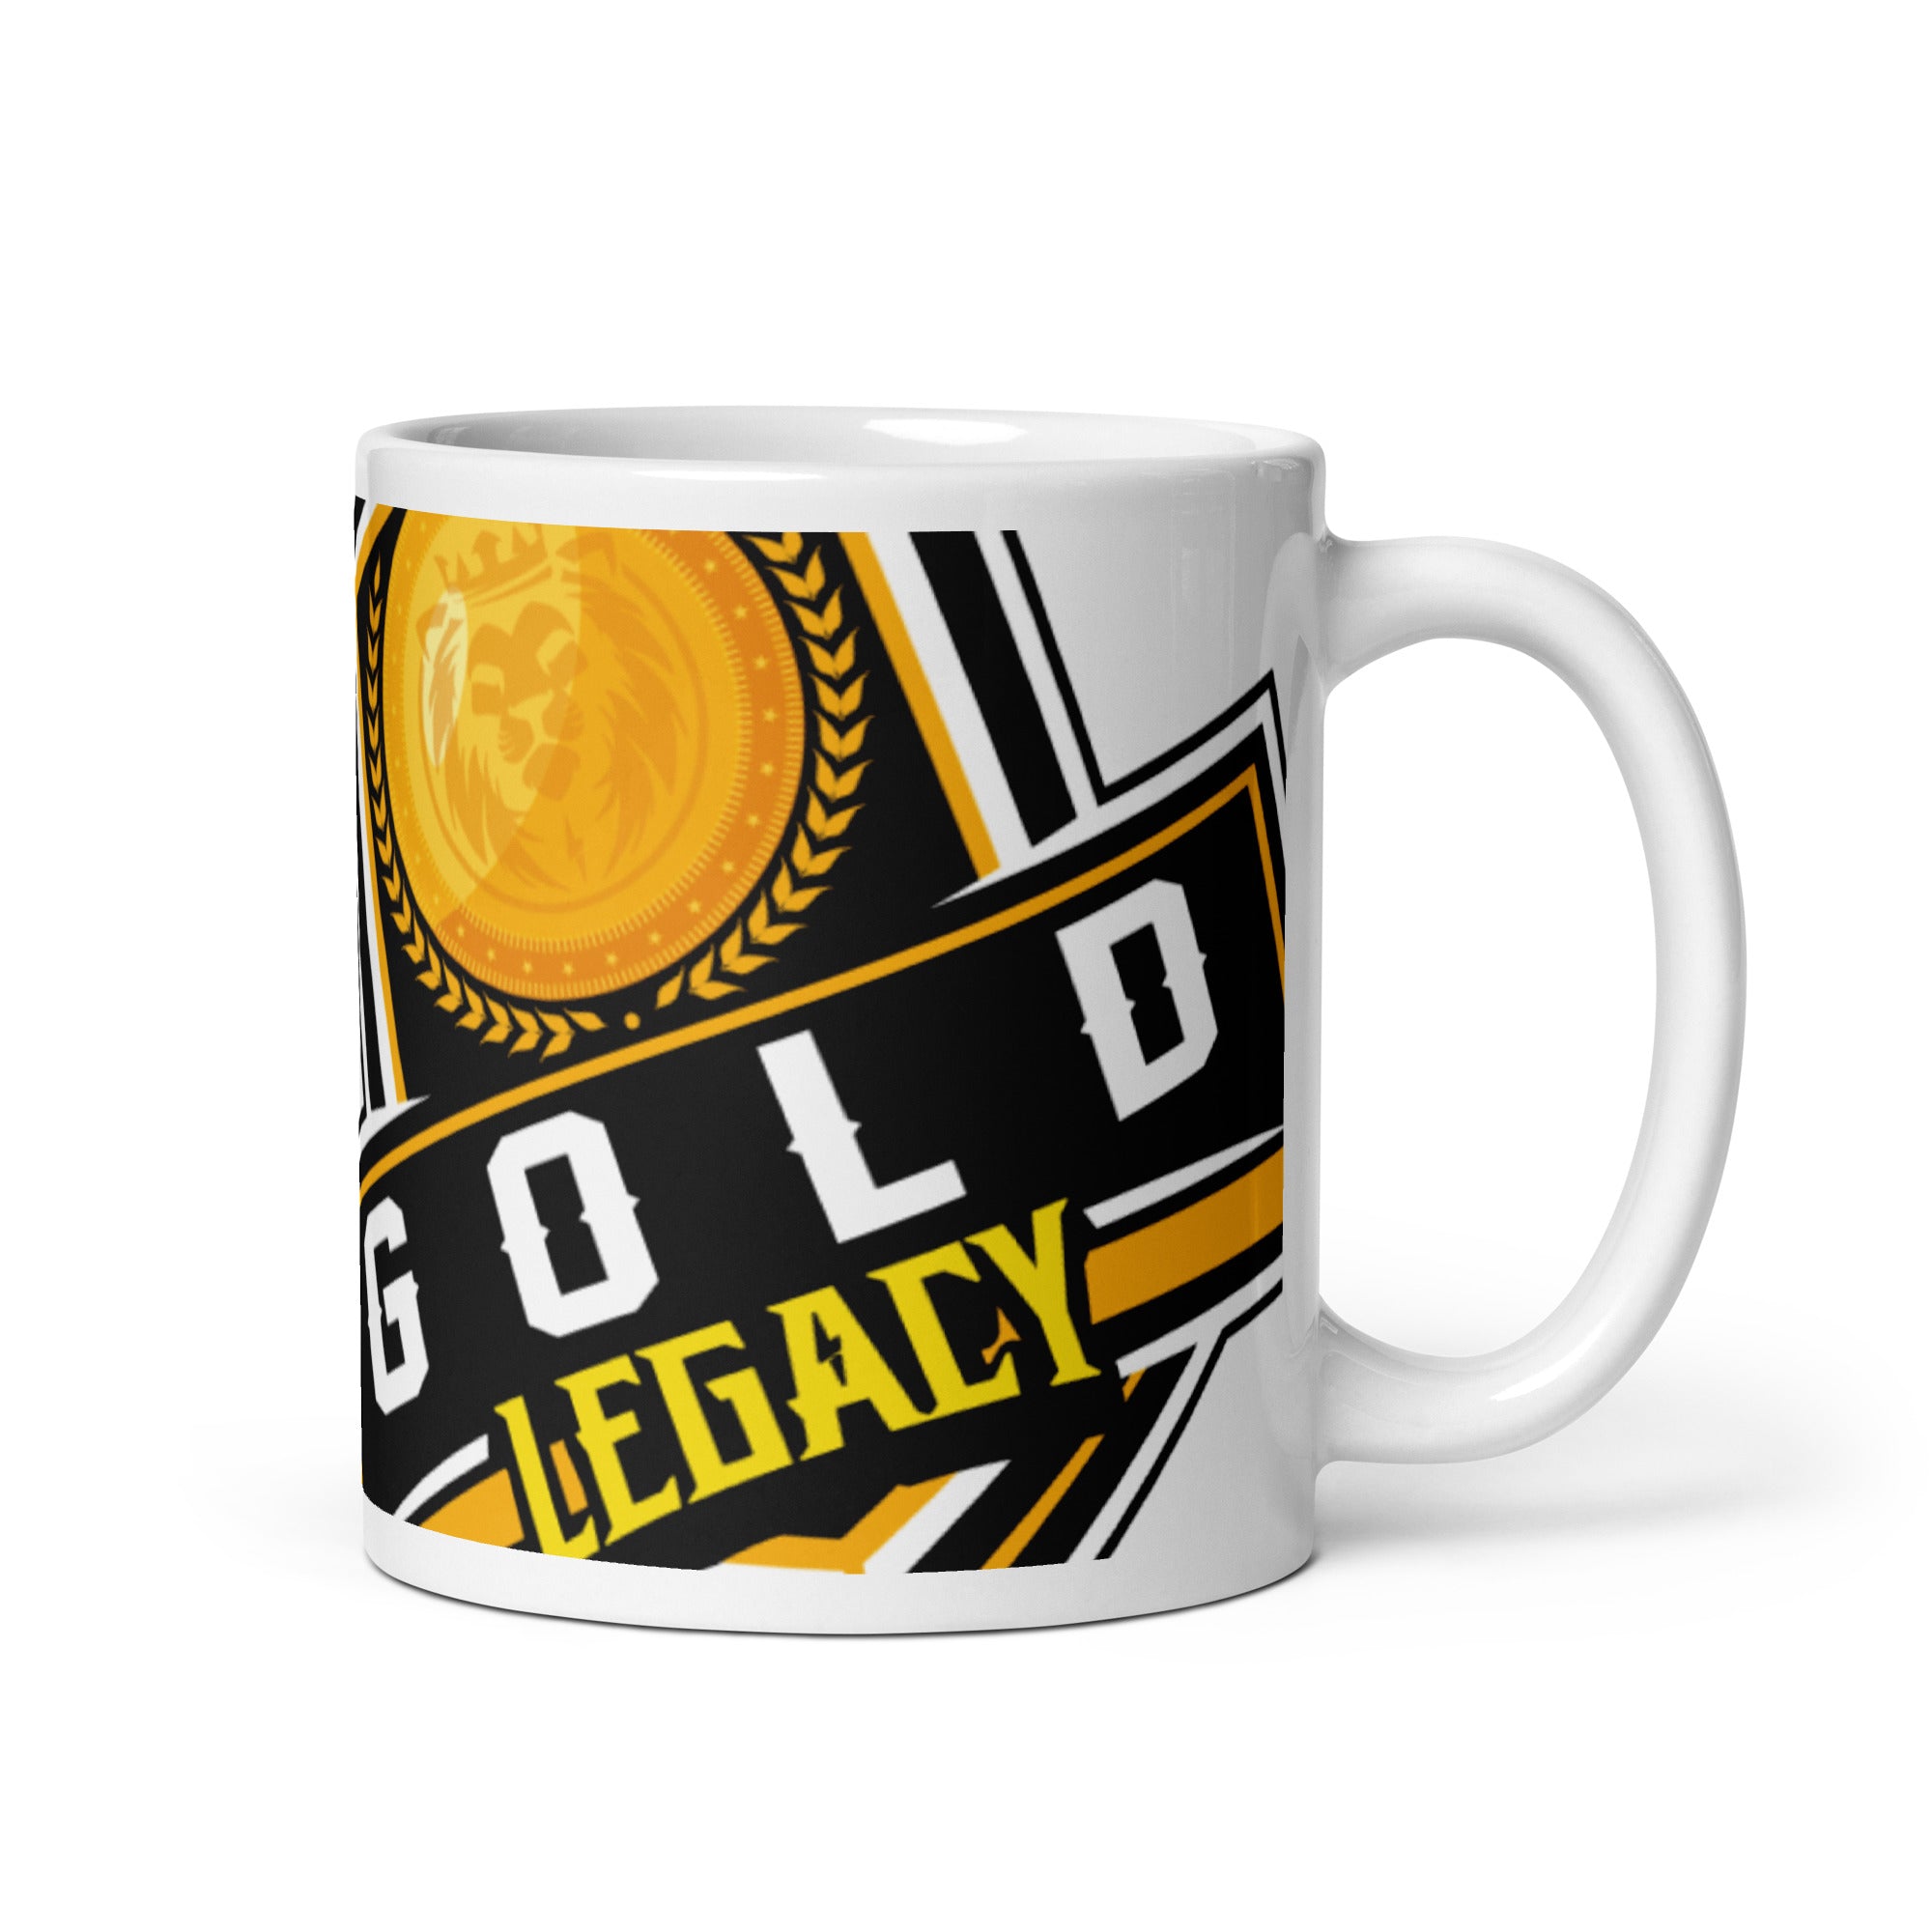 Gold White glossy mug